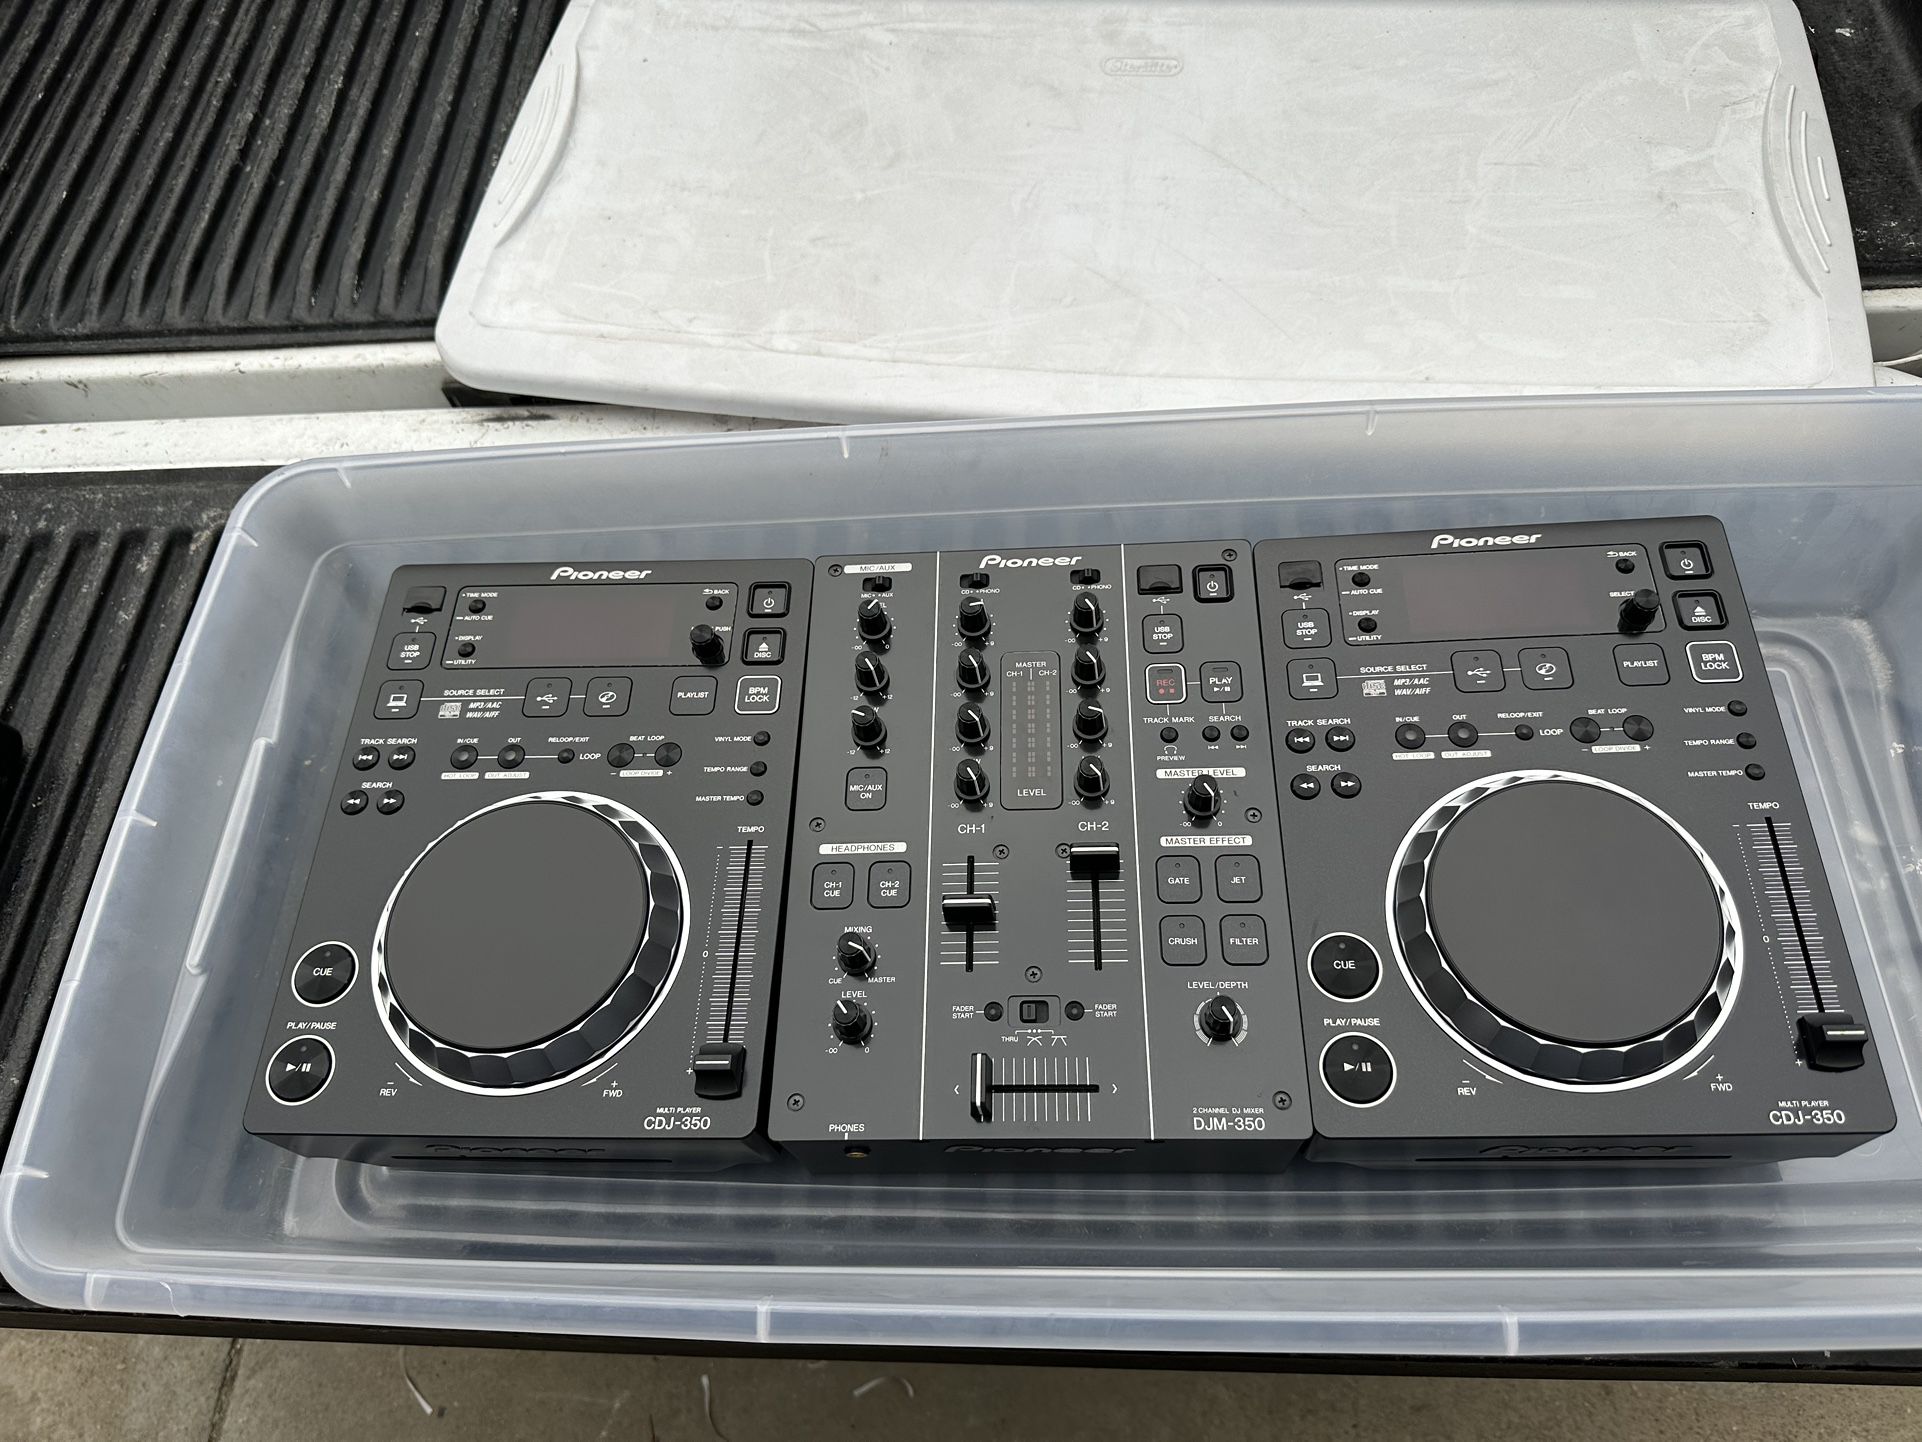 DJ Pioneer 